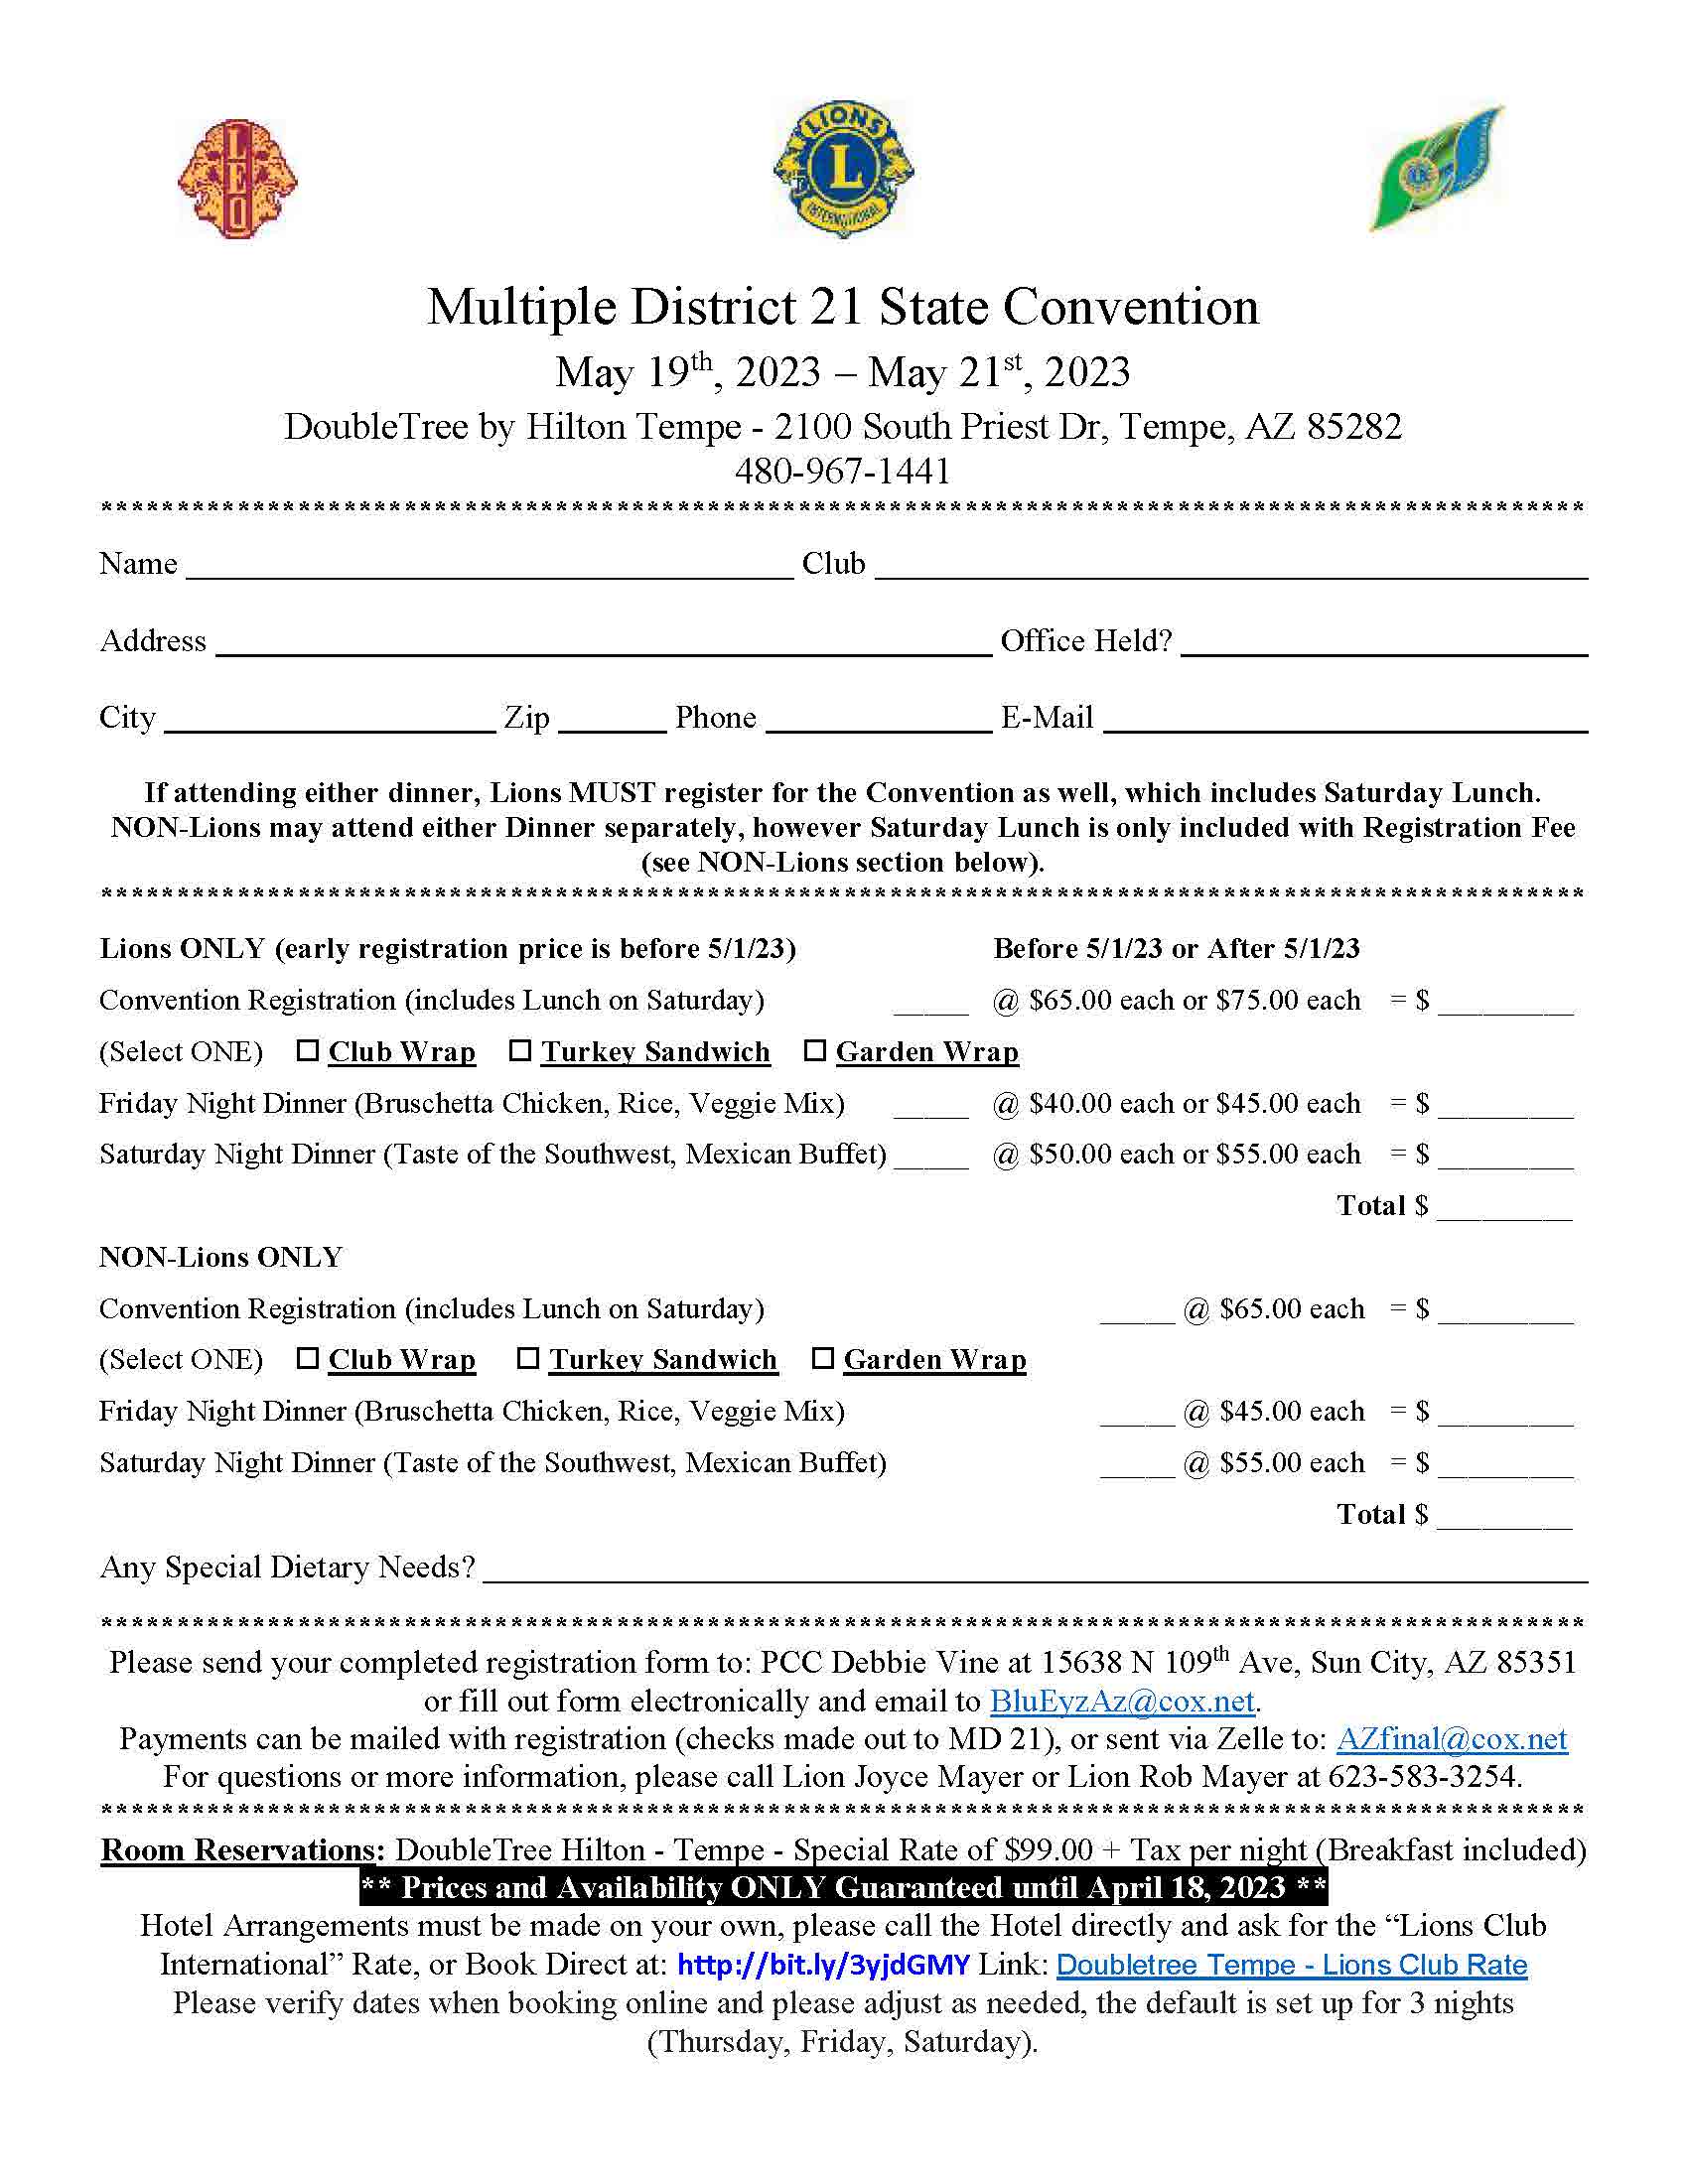 2023 Registration Form for Centennial Convention